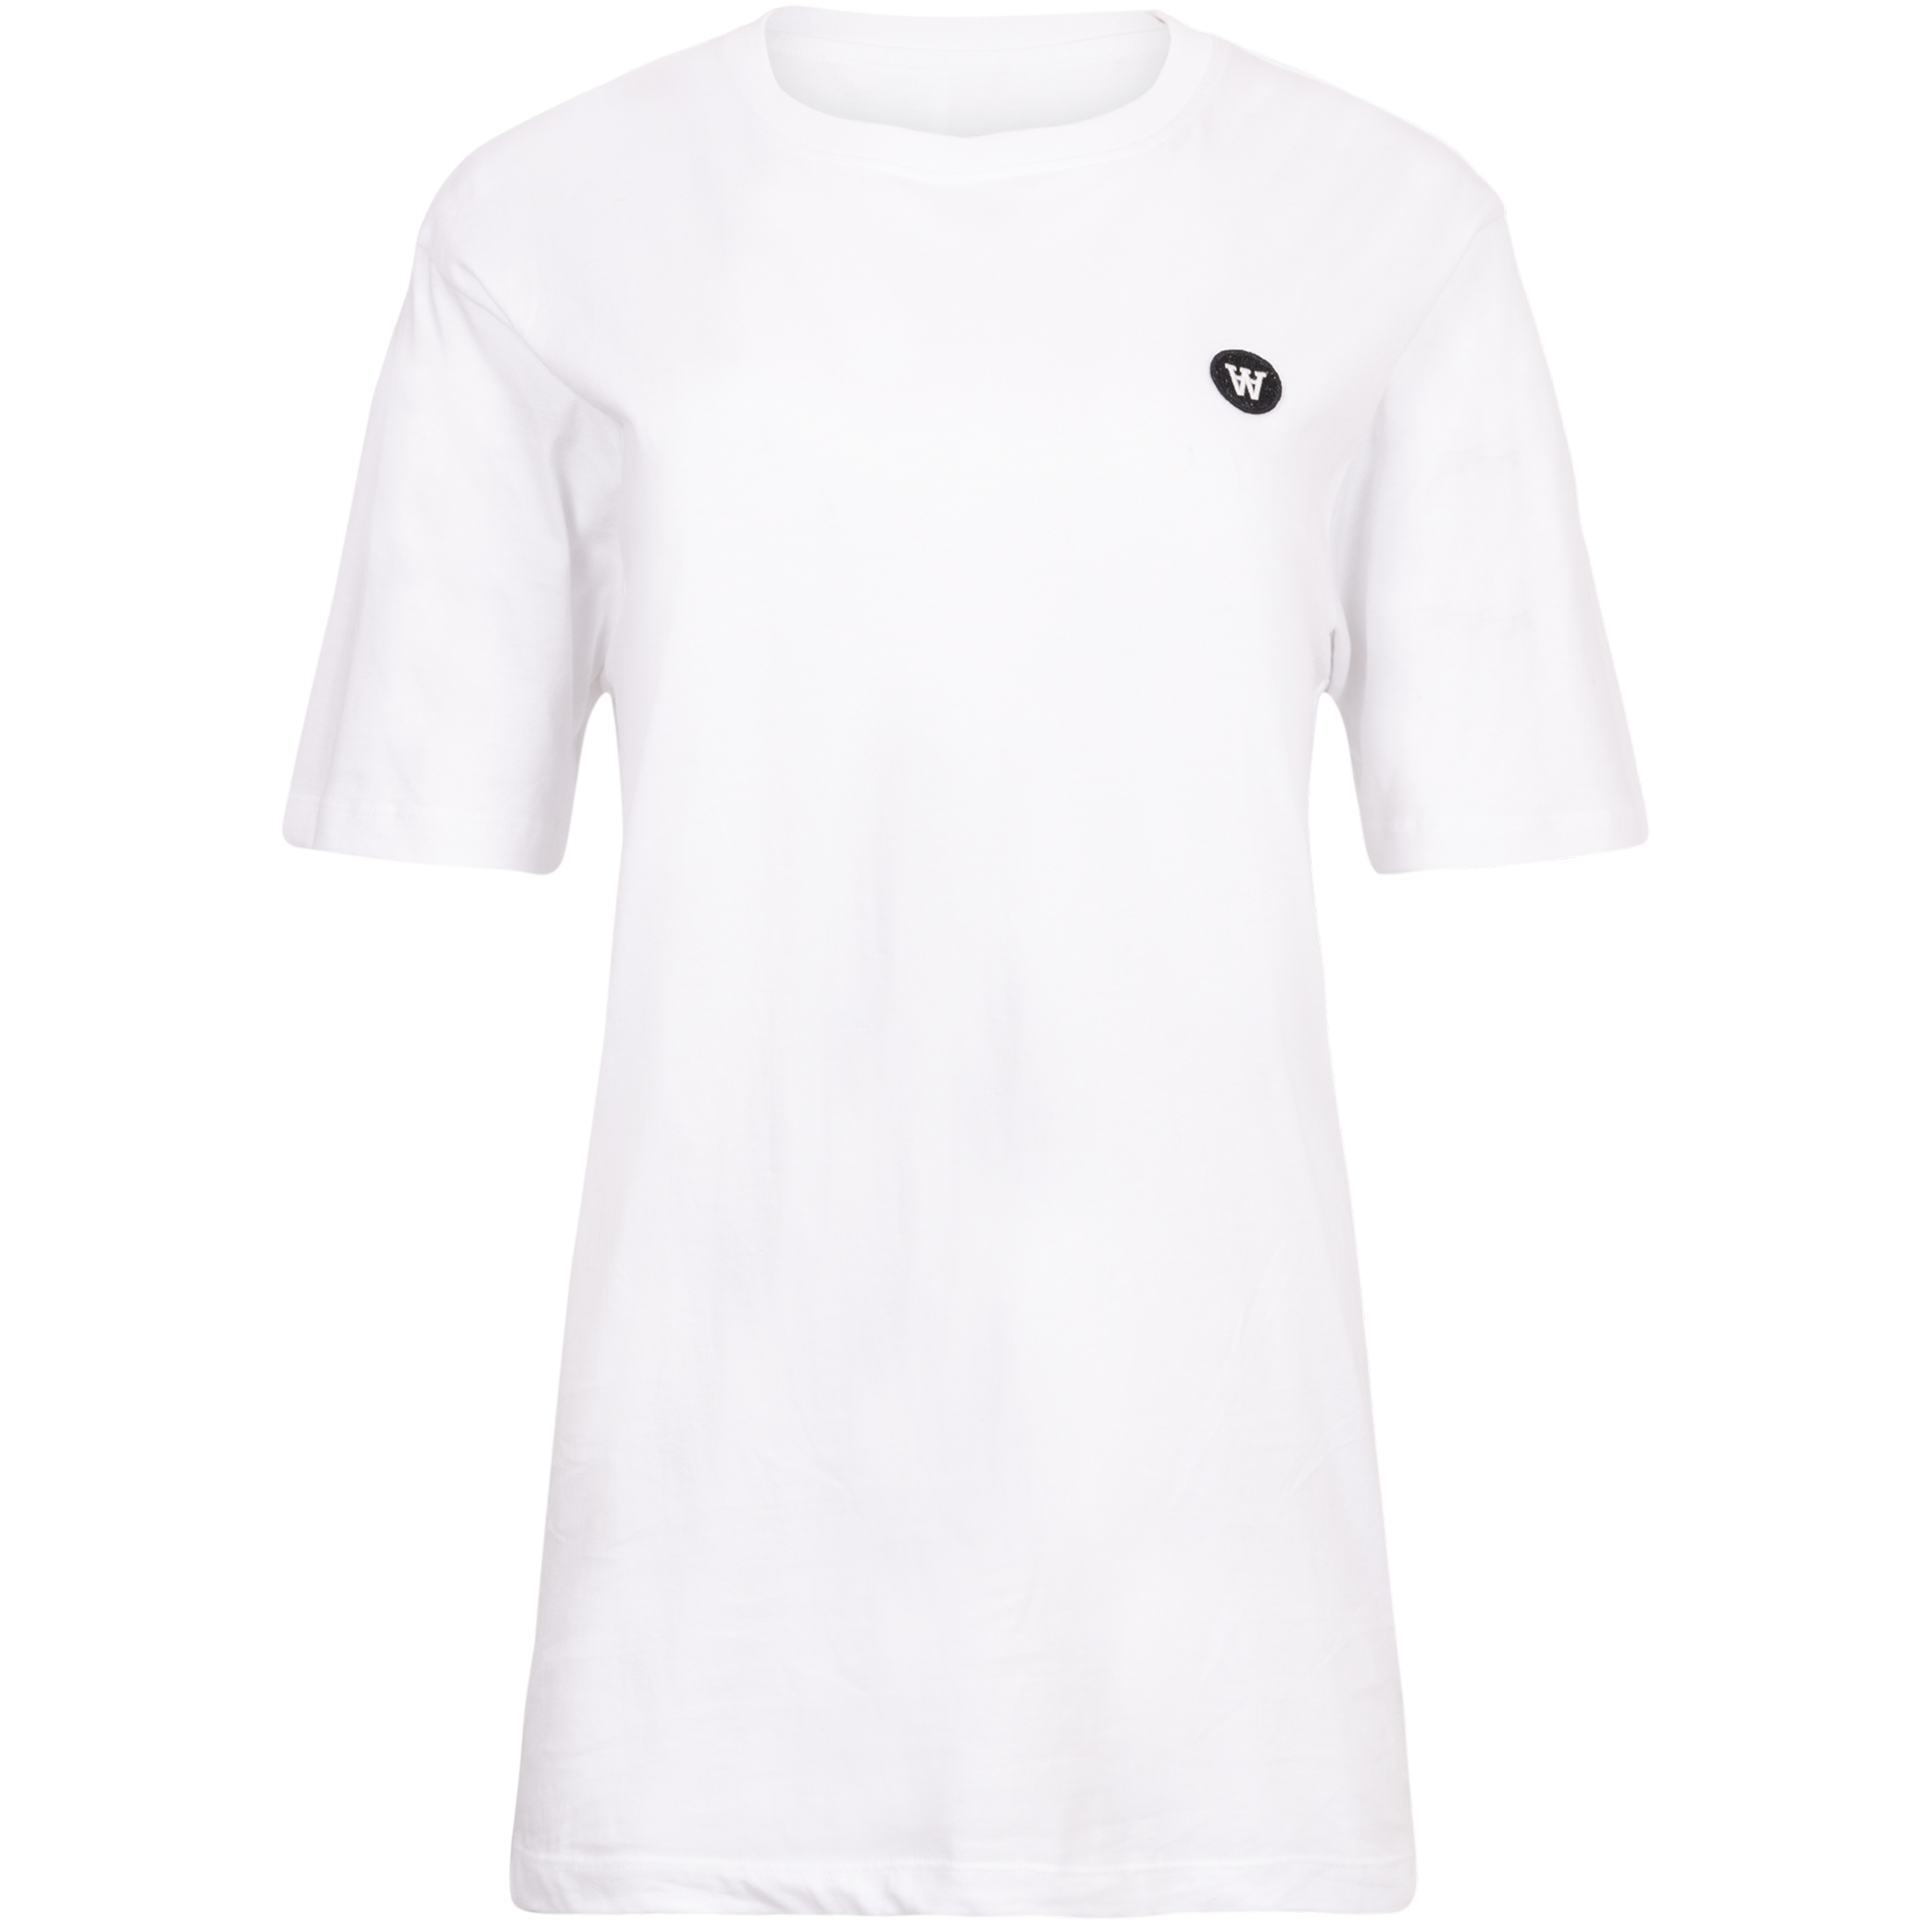 Ace Badge T-Shirt - White